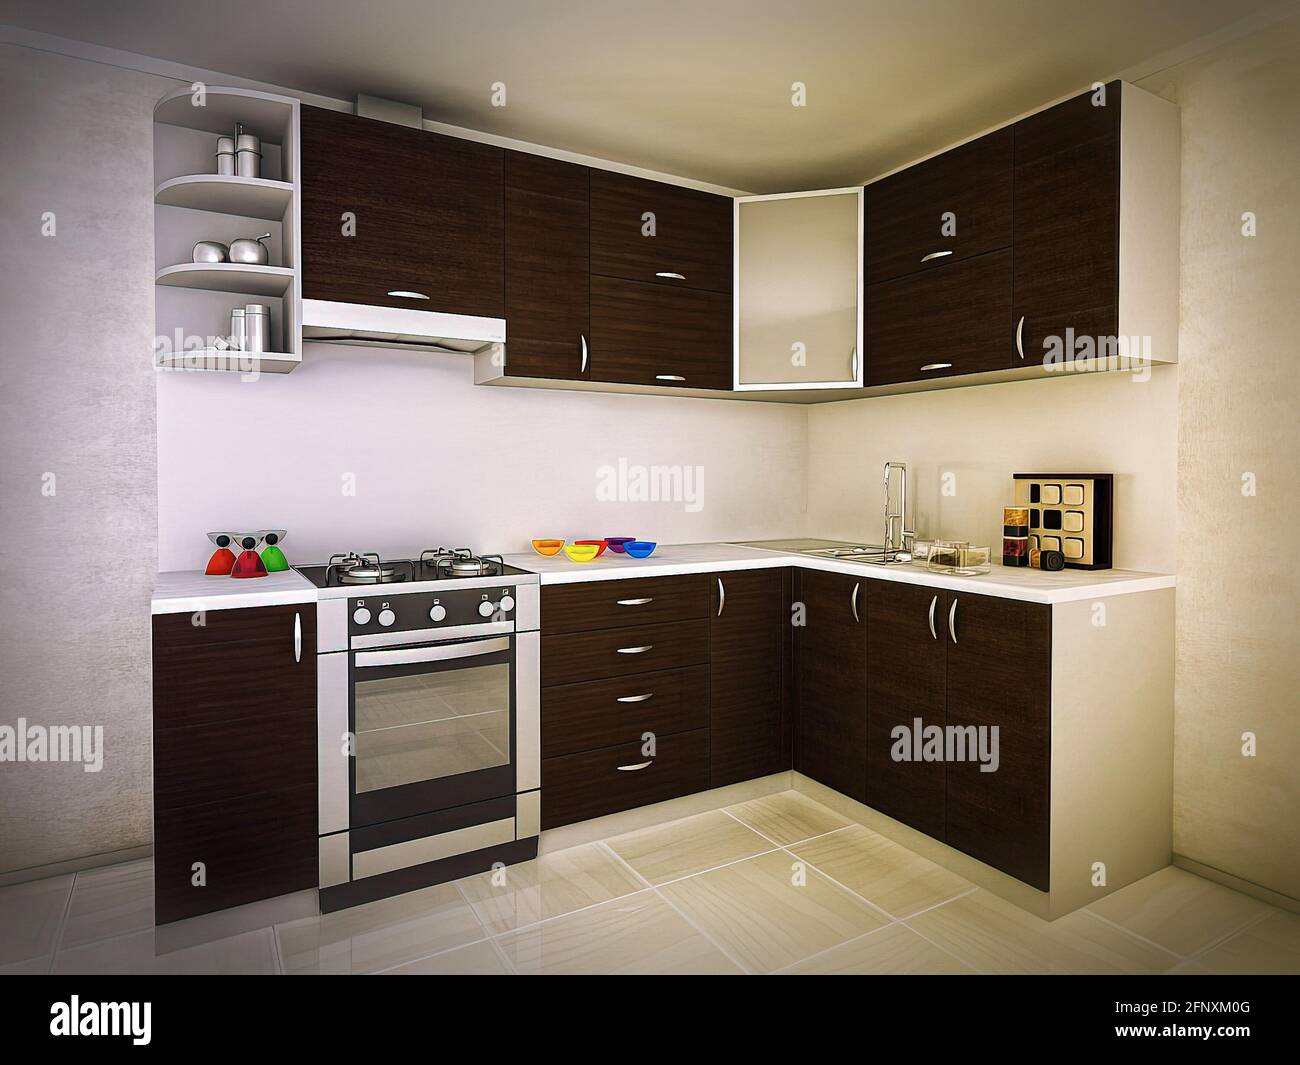 3d illustration of modern kitchen design concept in traditional